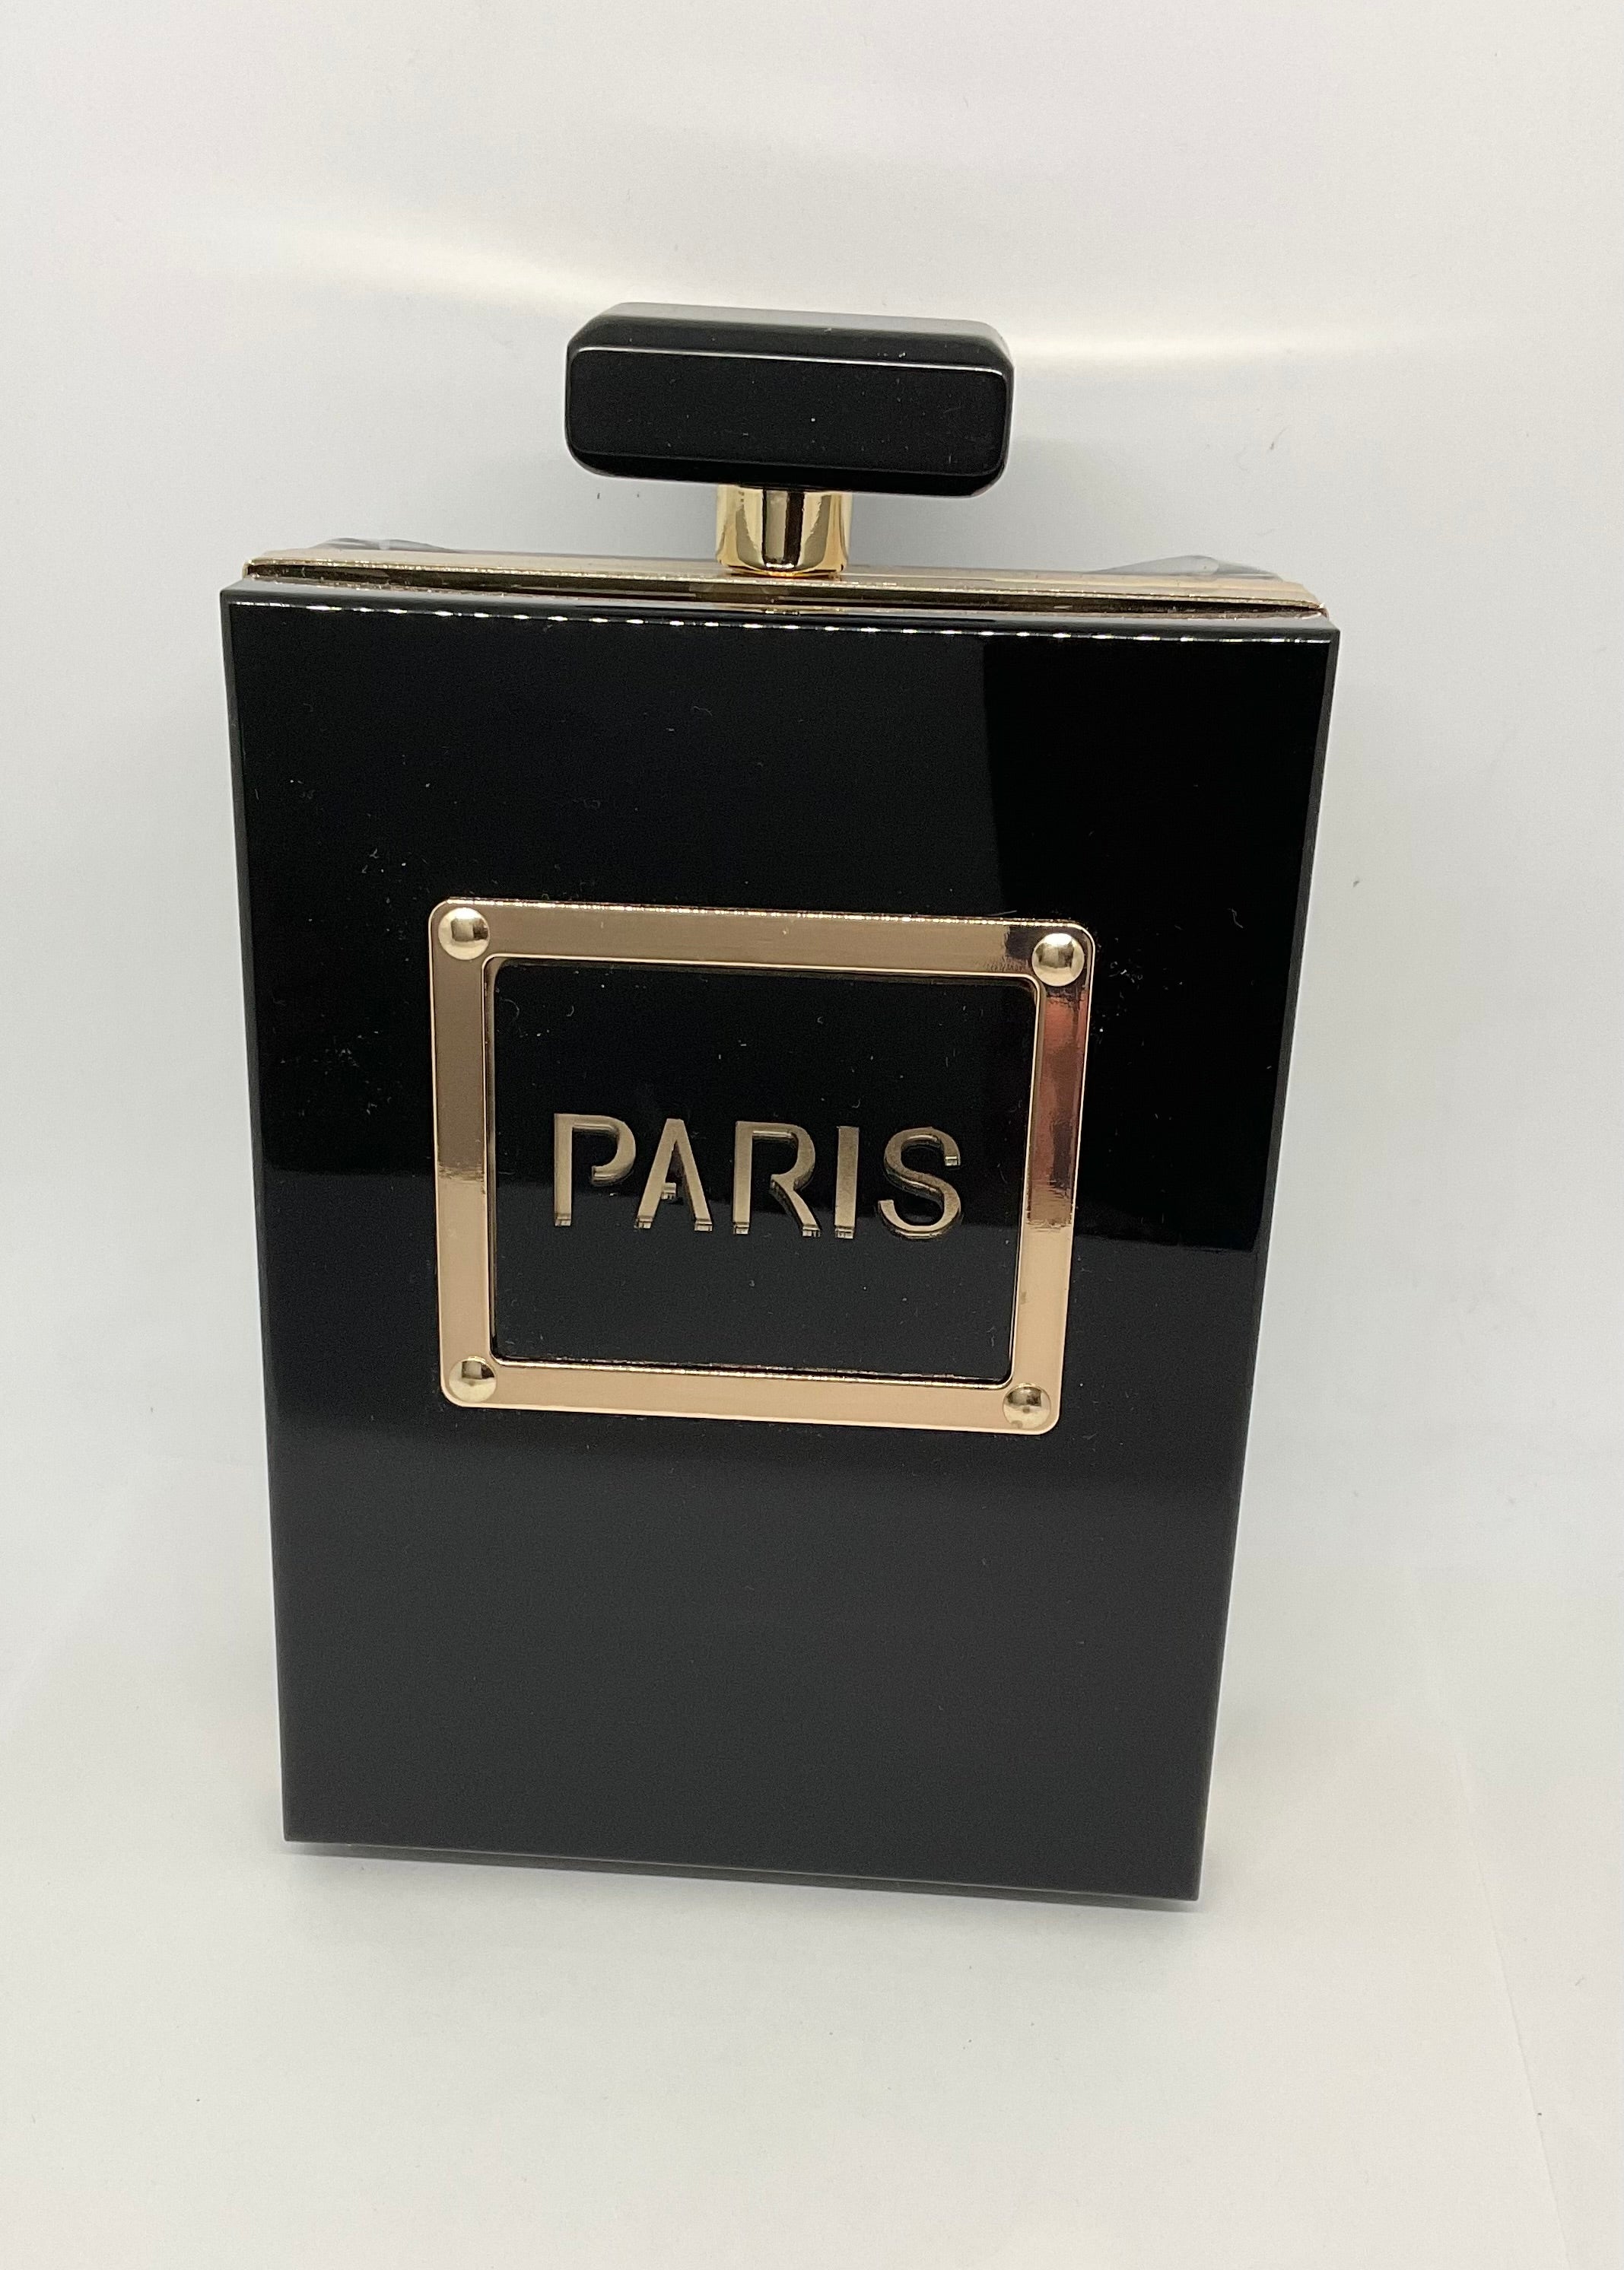 Paris  Novelty Bag